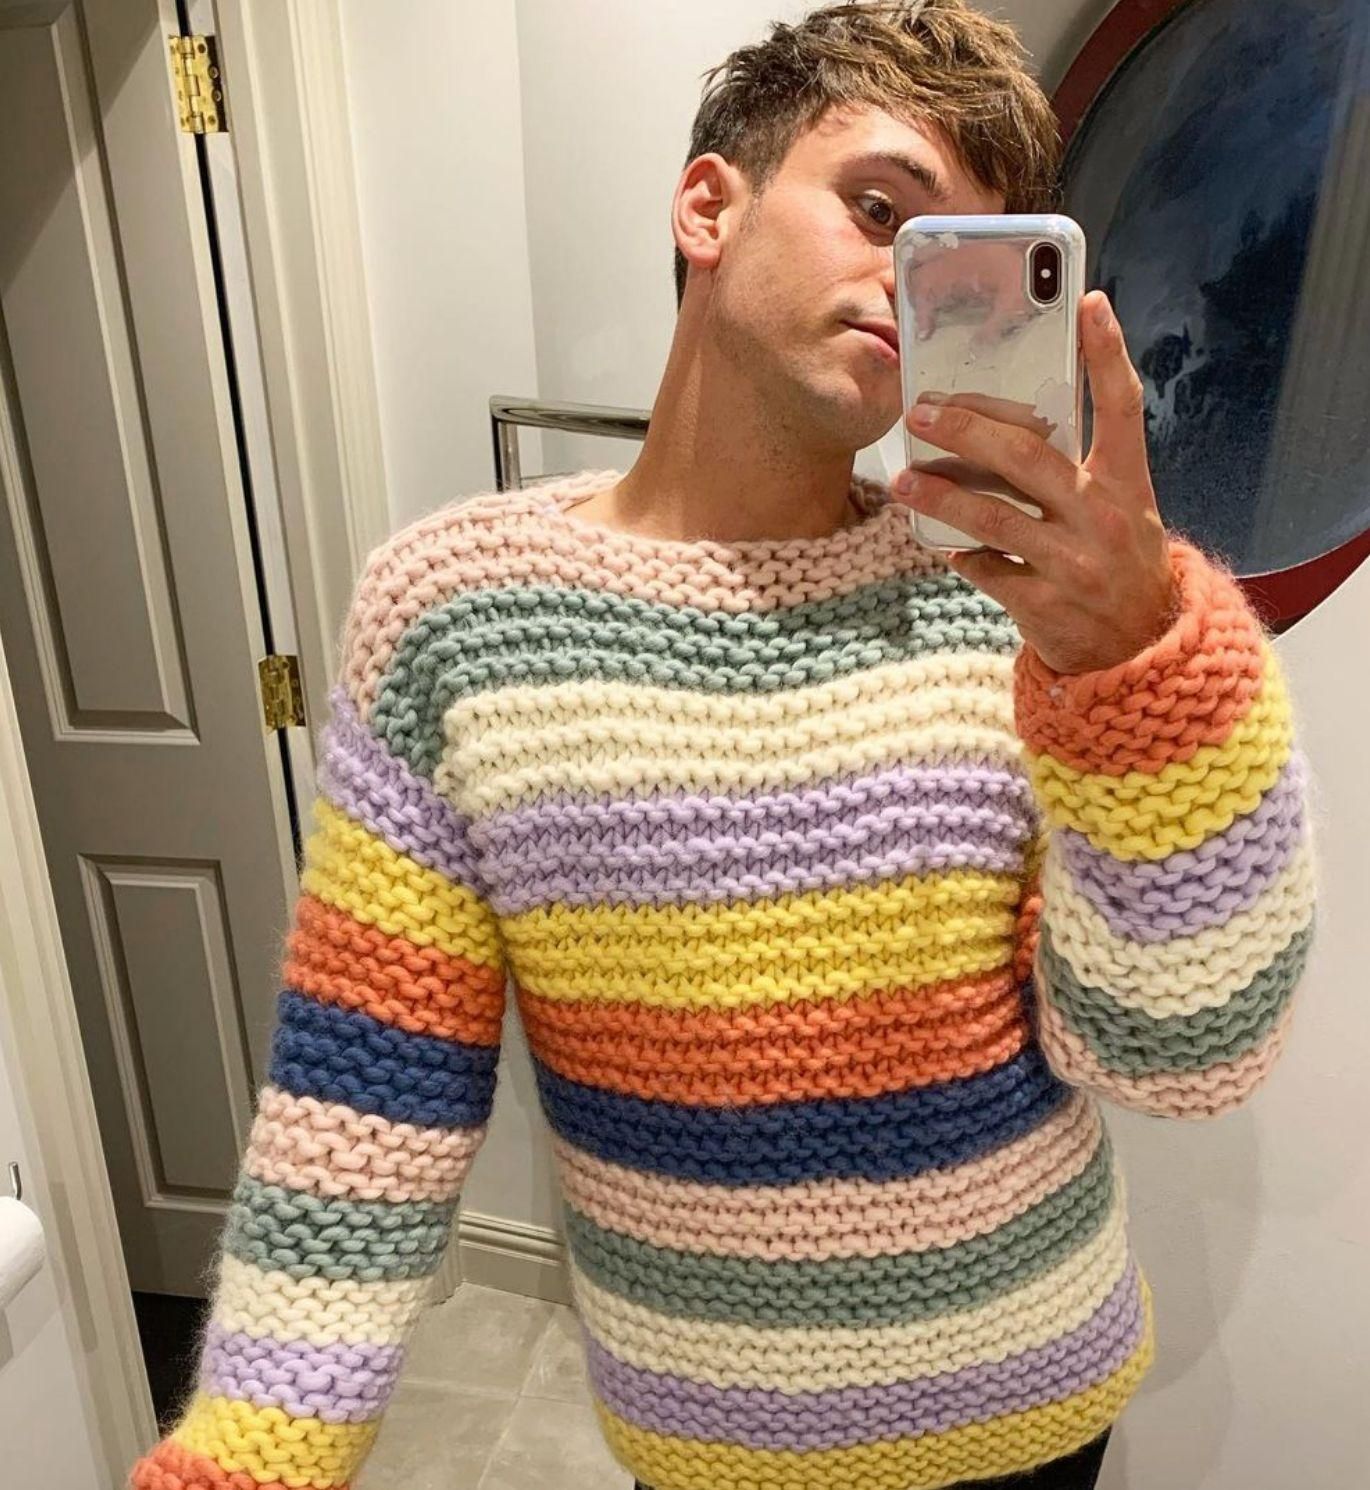 3-tom-daley-crochet-looks-handmade-sweaters-clothes.jpg